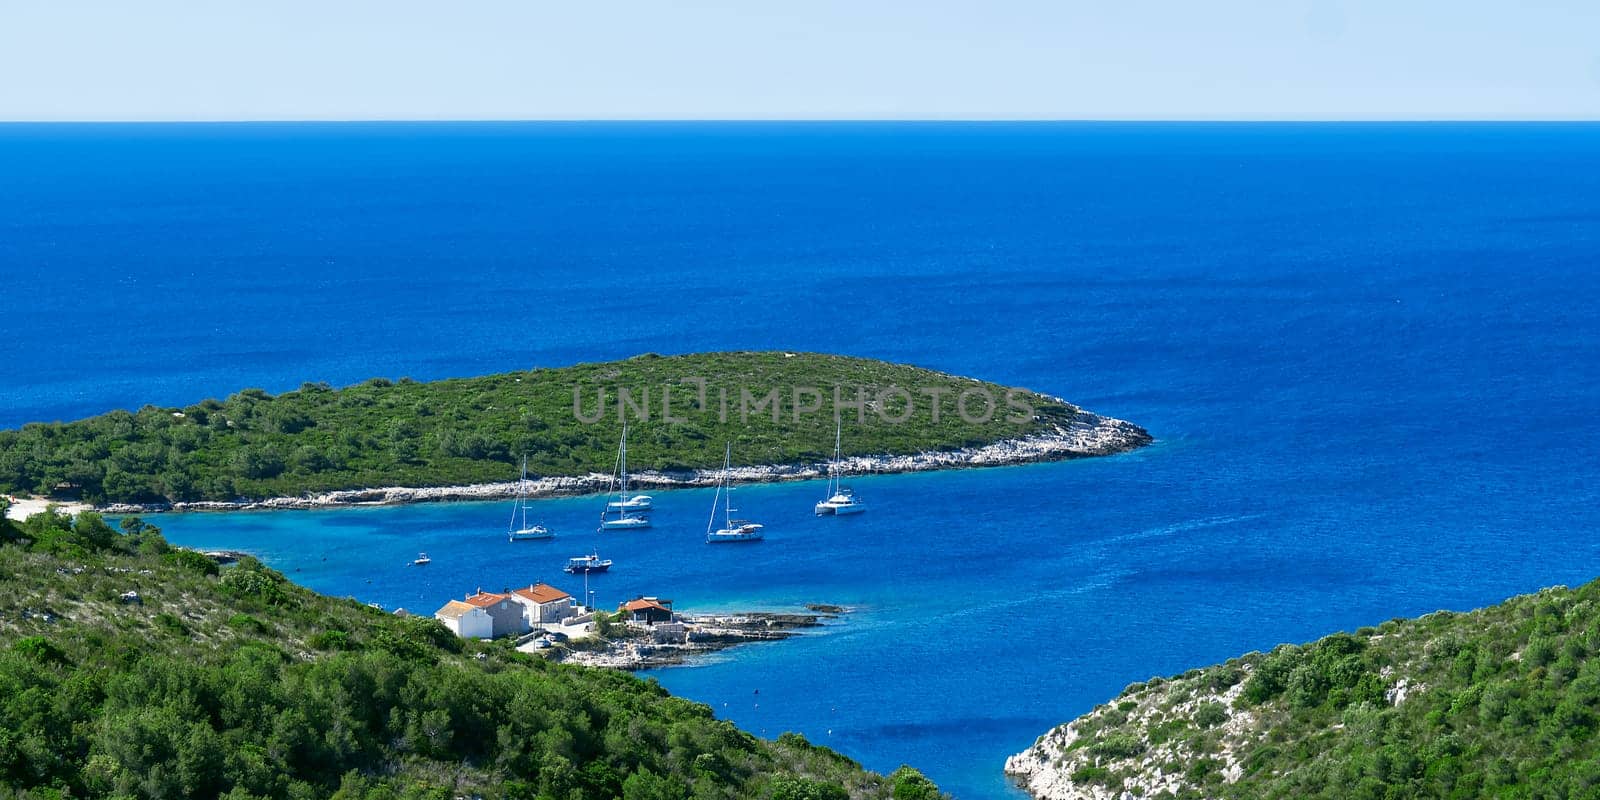 An island in the adriatic sea. Green island in blue adriatic sea , Dalmatia, Croatia by PhotoTime